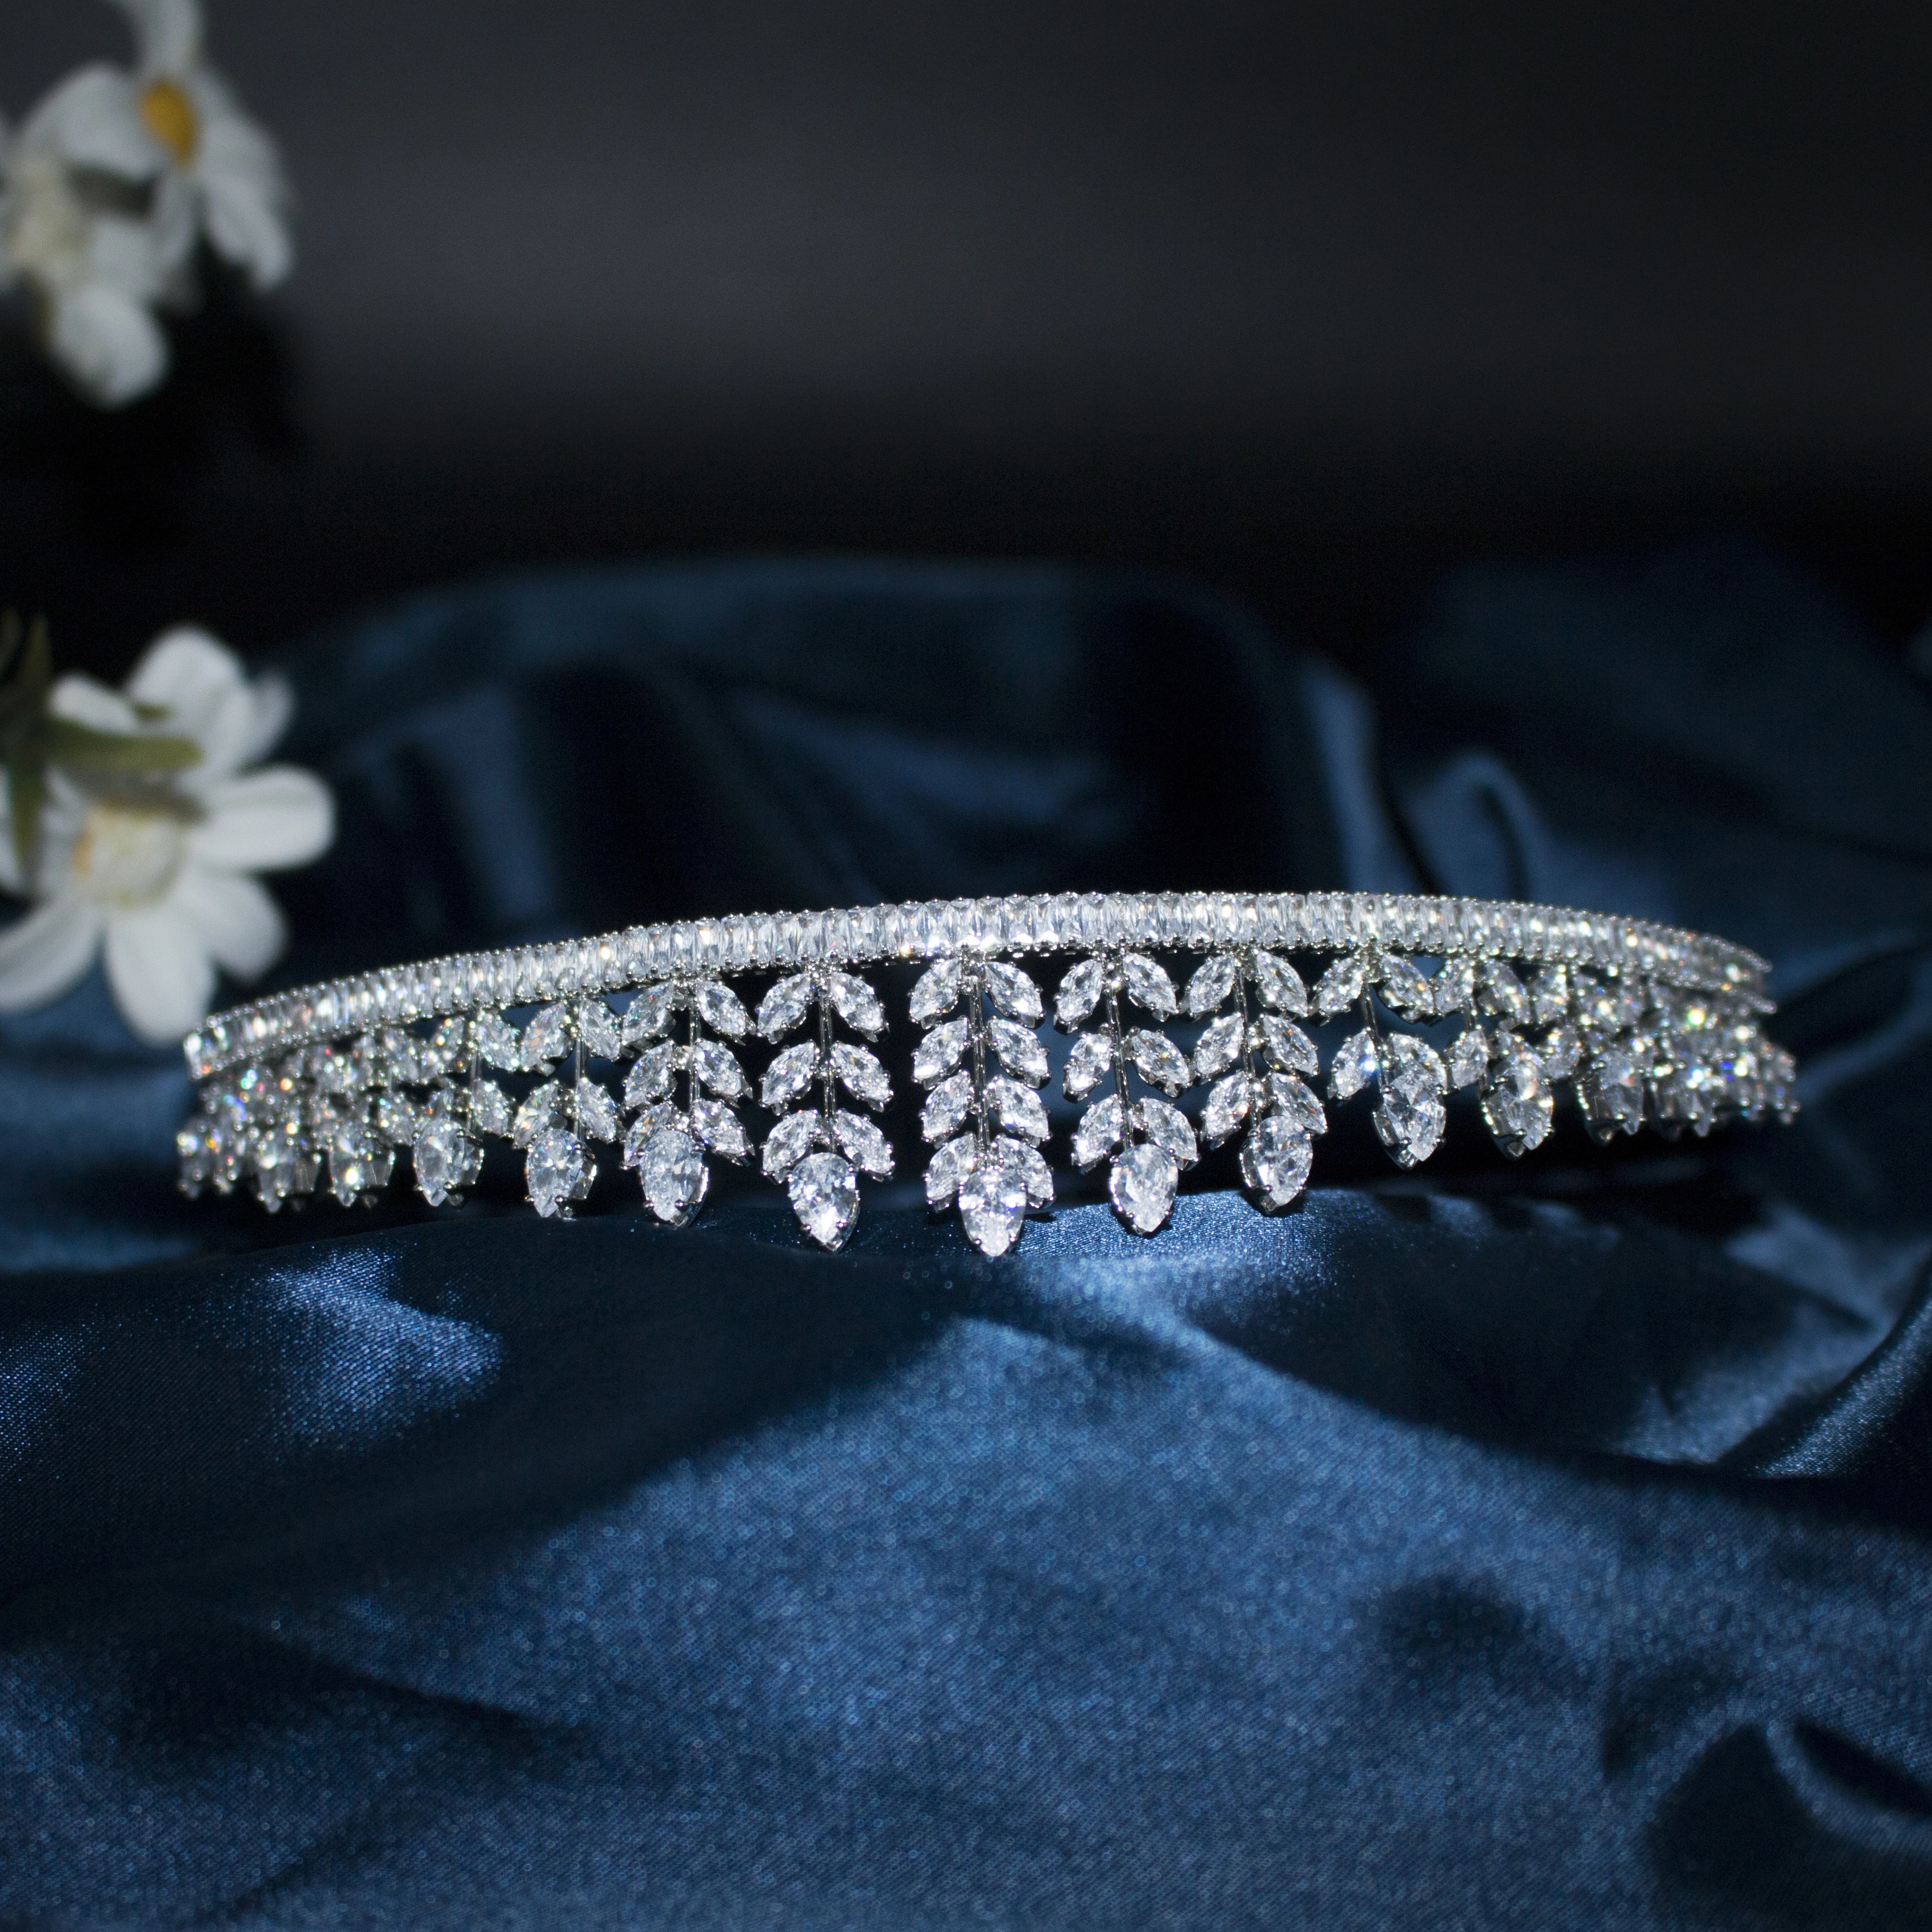 GS0165 New Stylish CZ Zirconia Zircon headpiece hair accessories Wedding Bridal beauty tiara crown